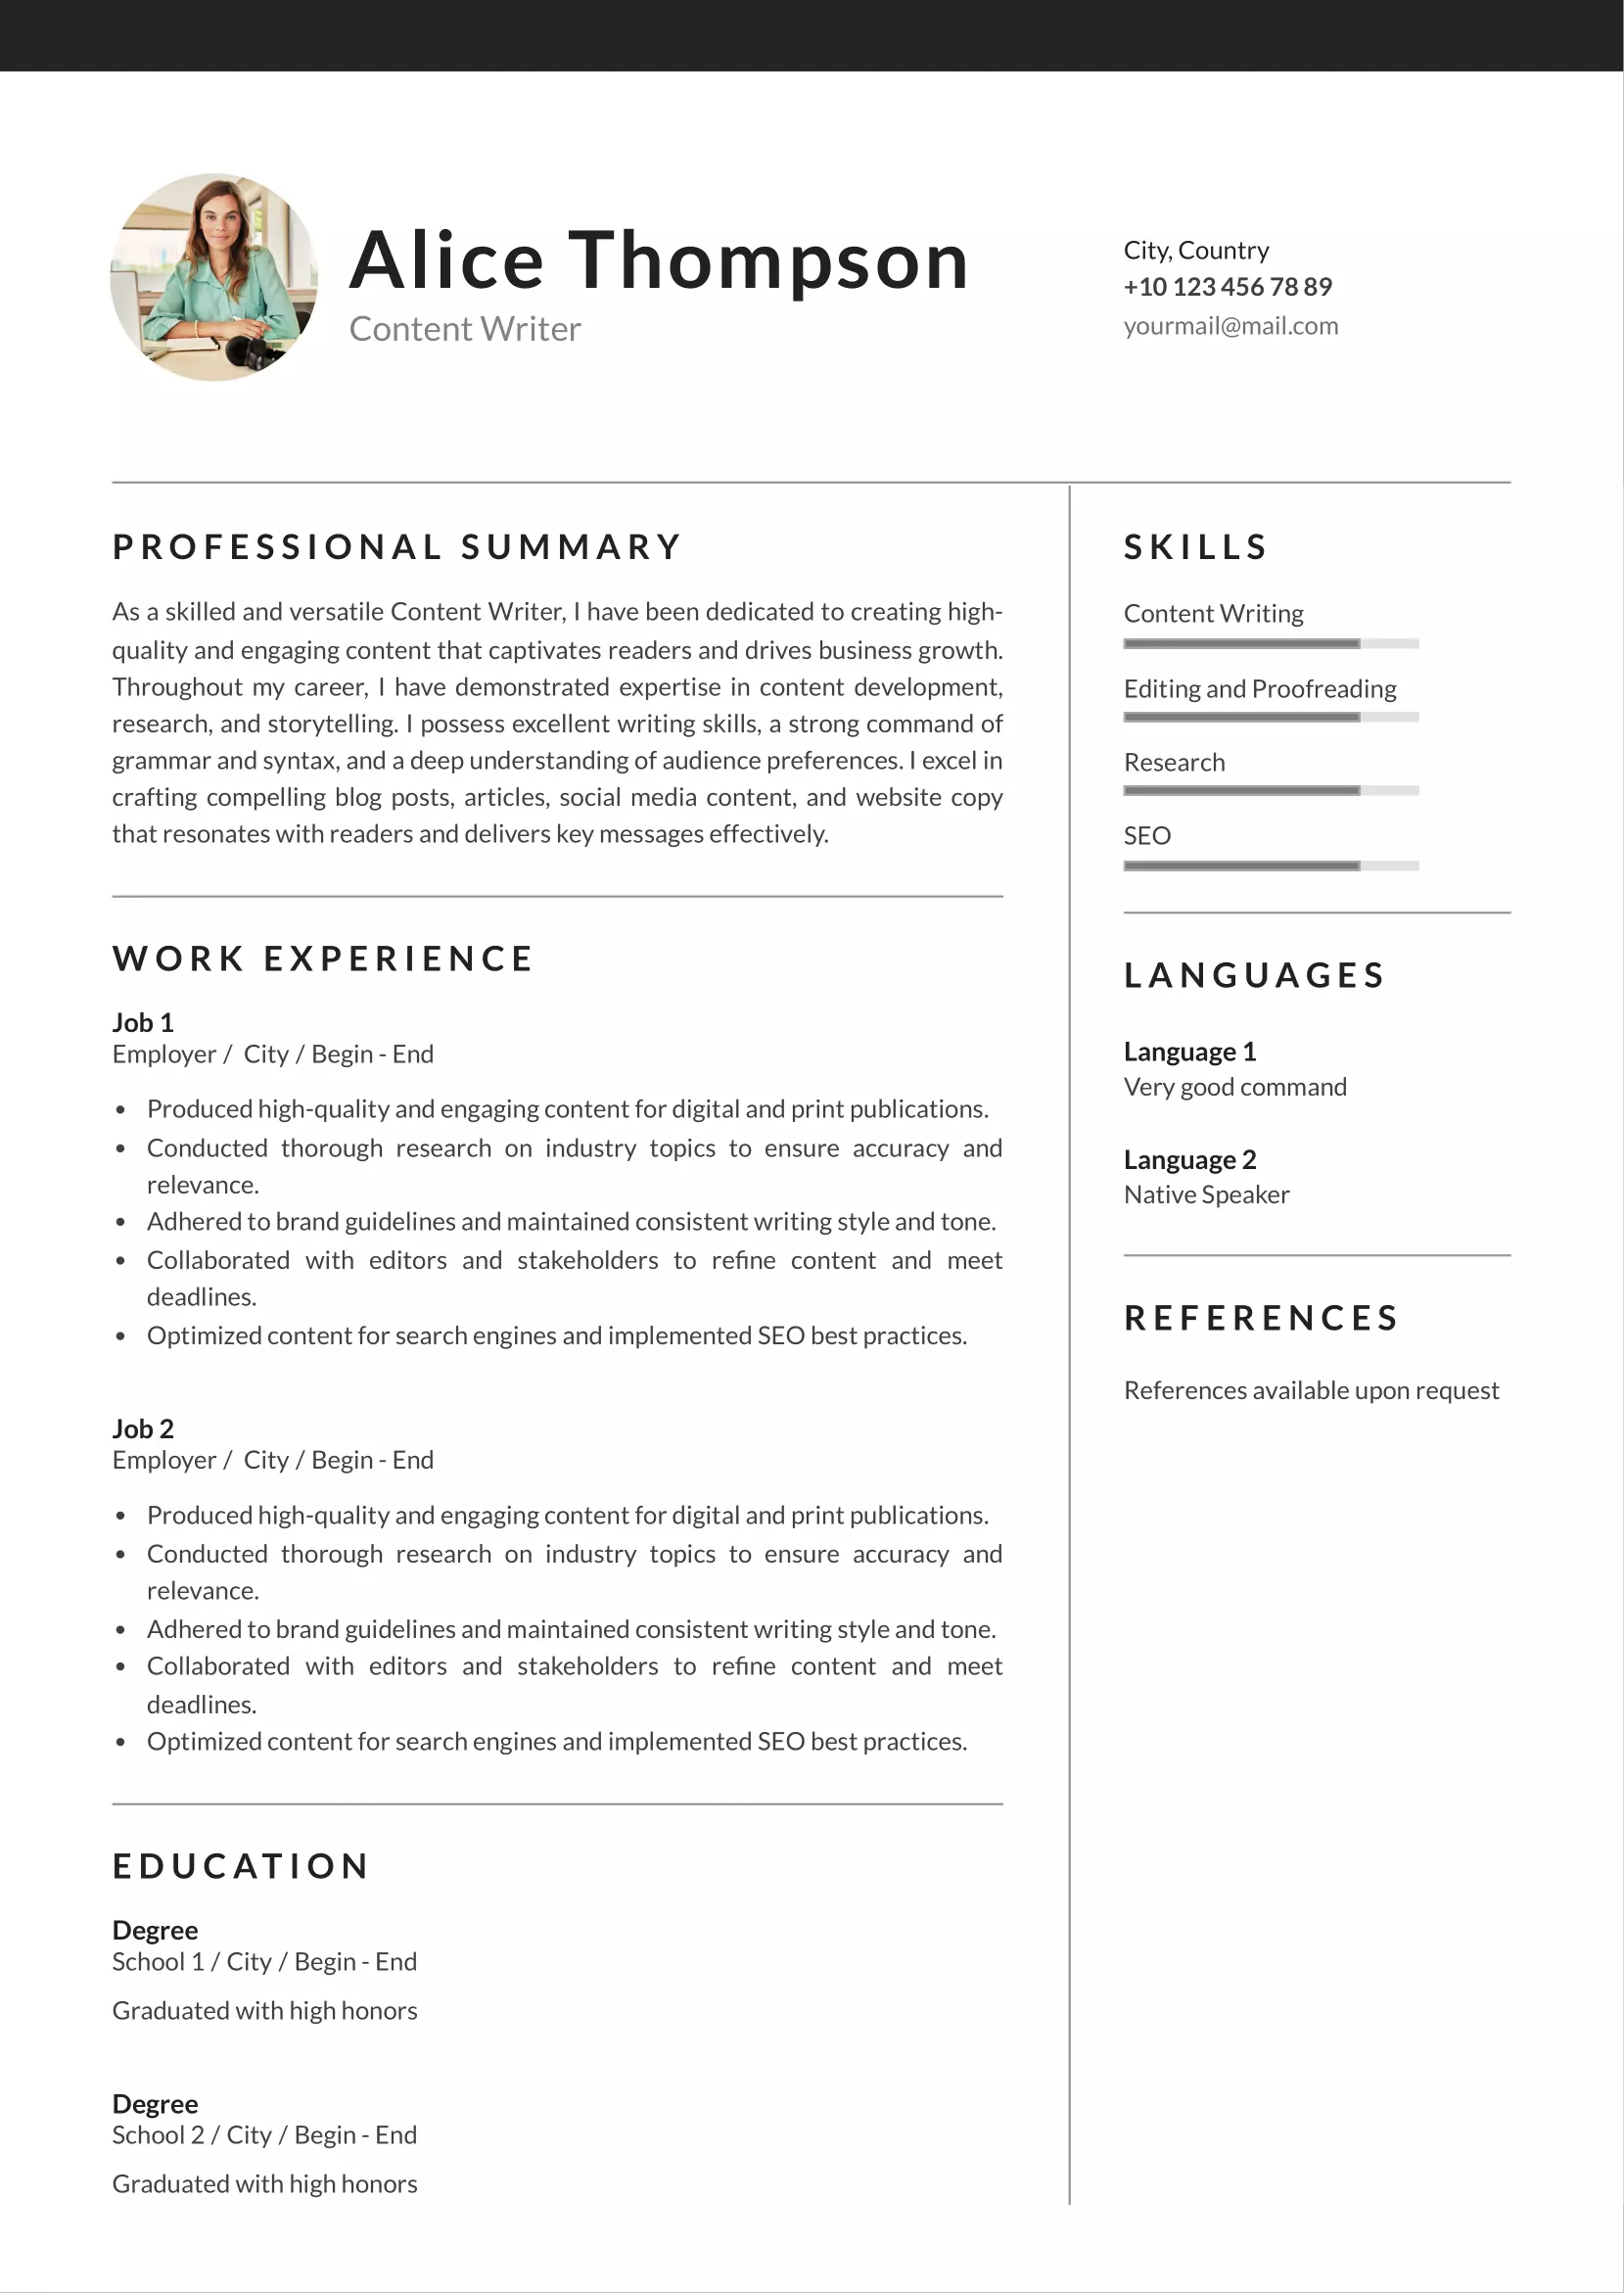 Content writer resume CV